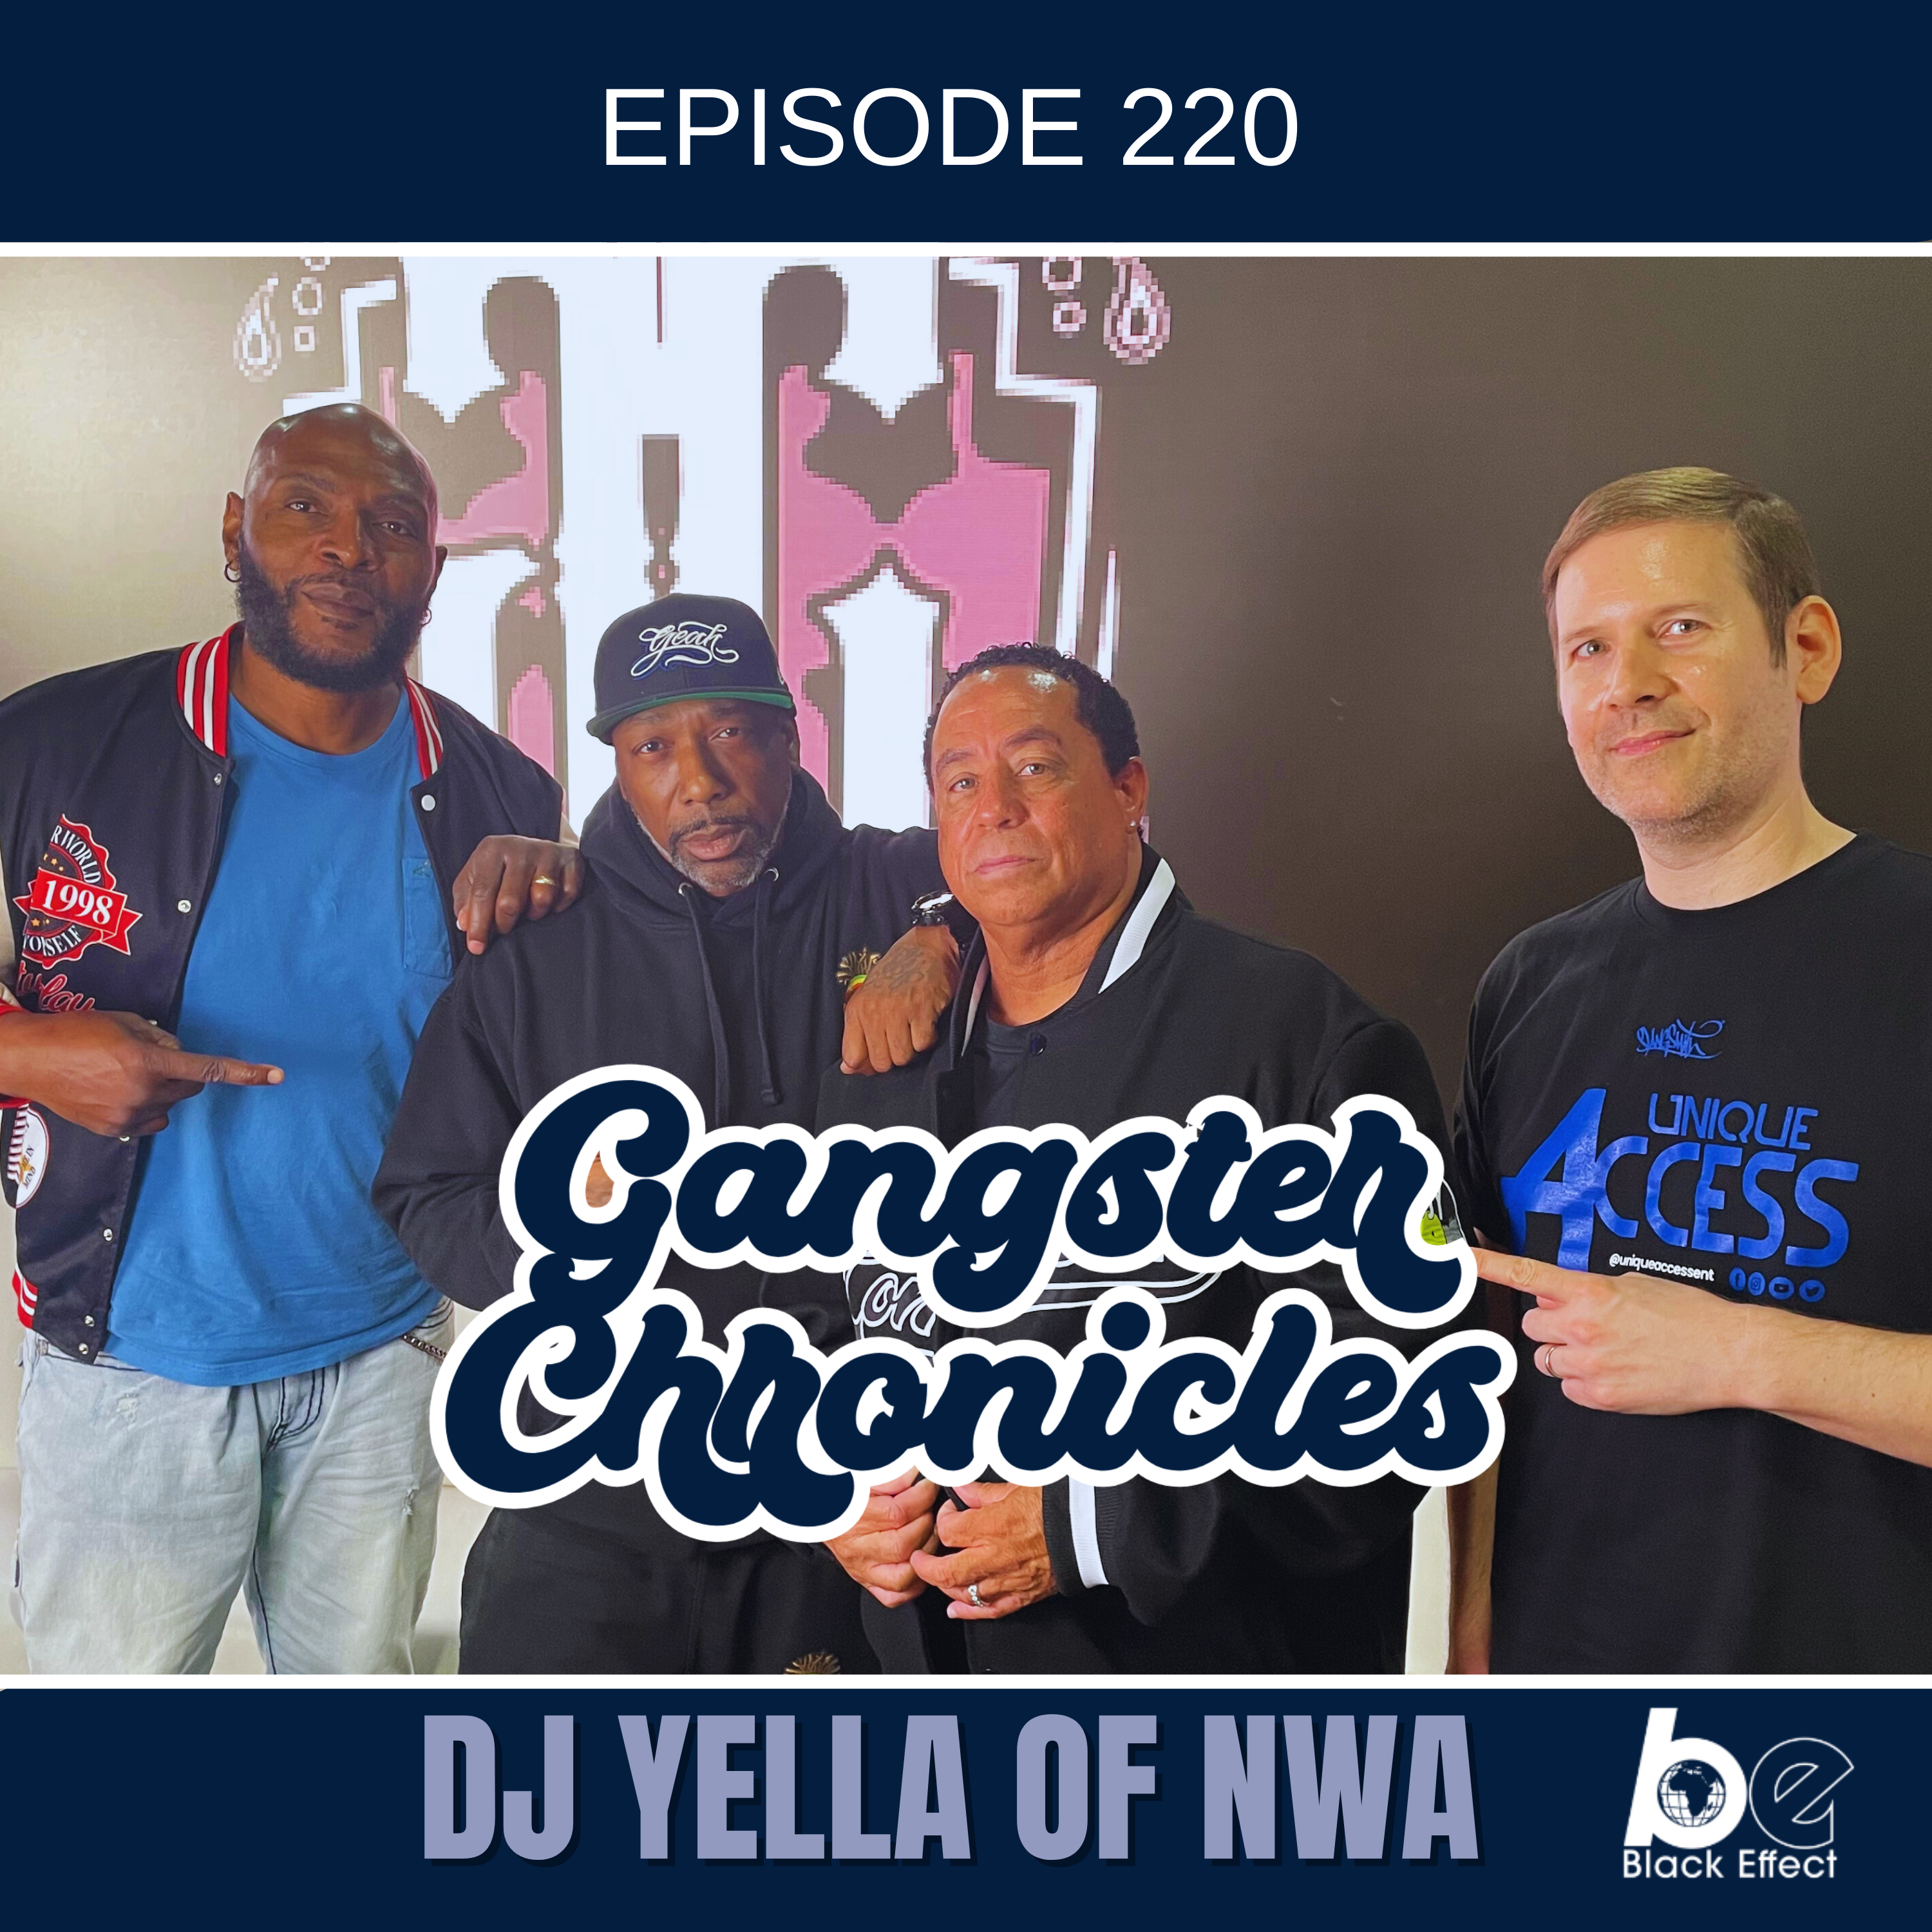 DJ Yella of NWA: Eazy Didn't Know He Had AIDS